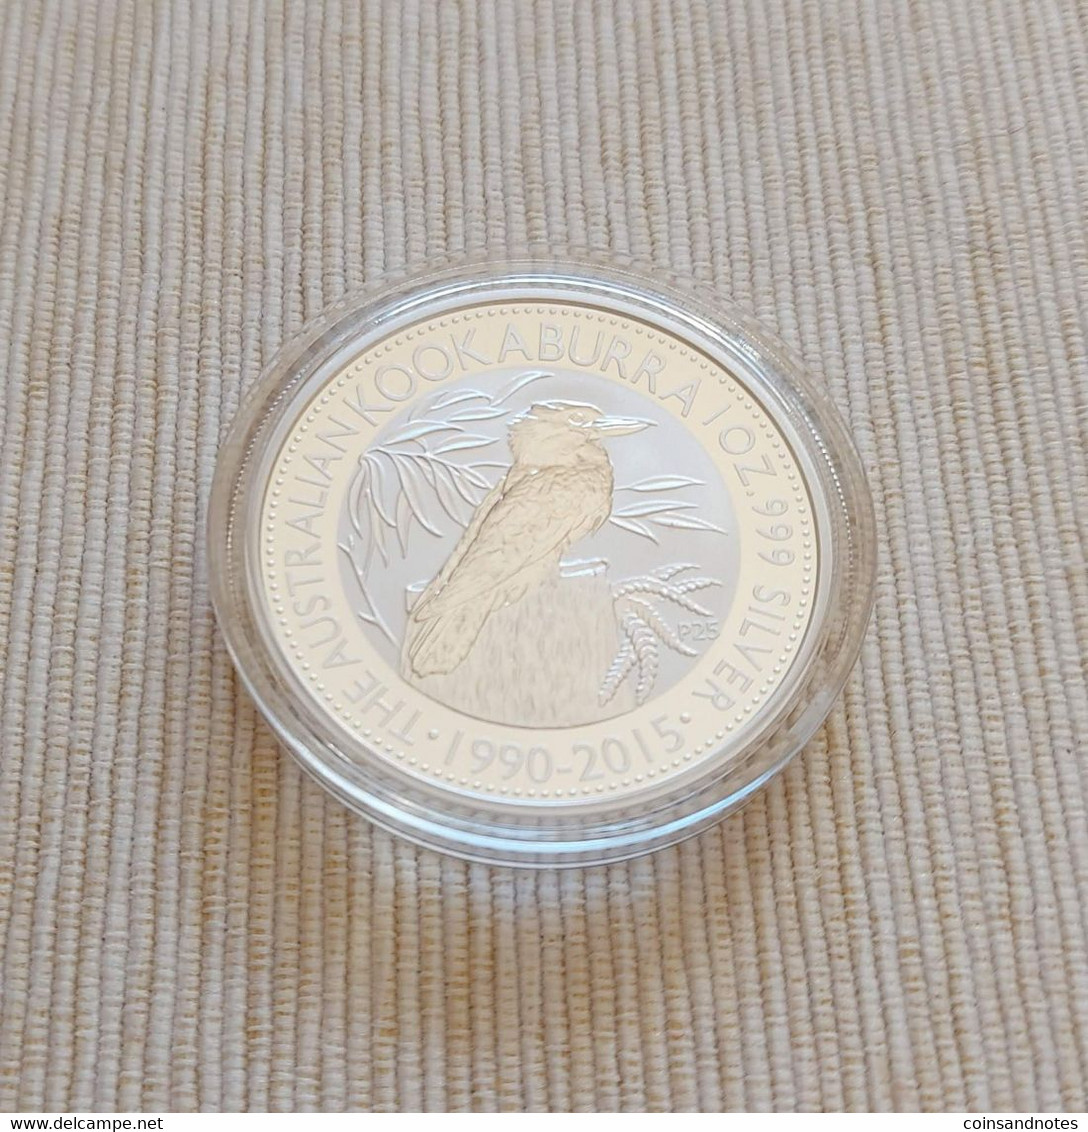 Australië 2015 - 1 Oz Silver Dollar - Kookaburra - UNC - Sammlungen